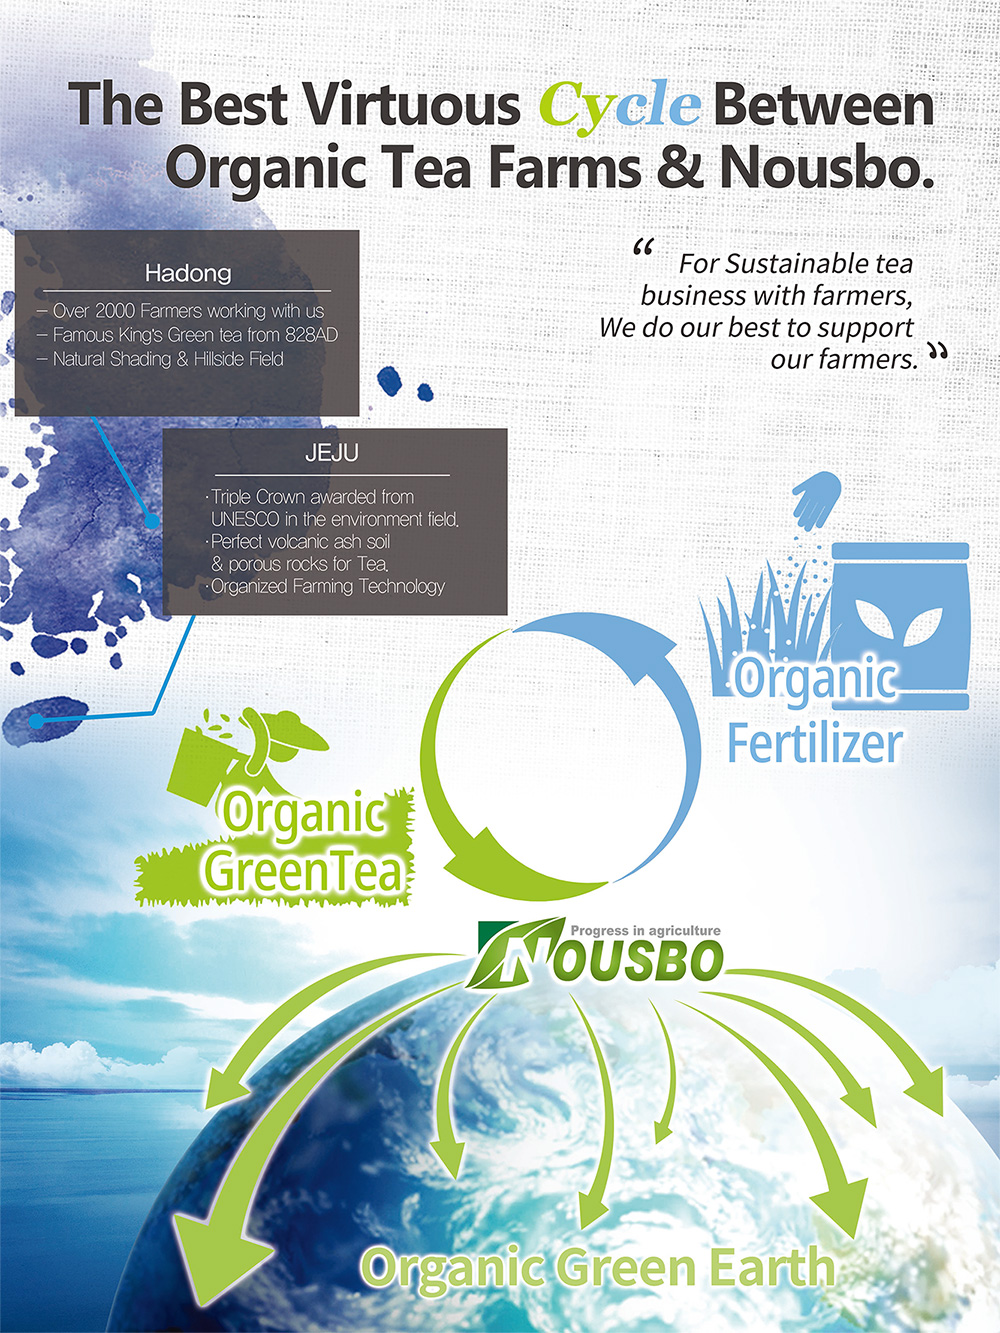 Organic Tea Farms and Nousbo